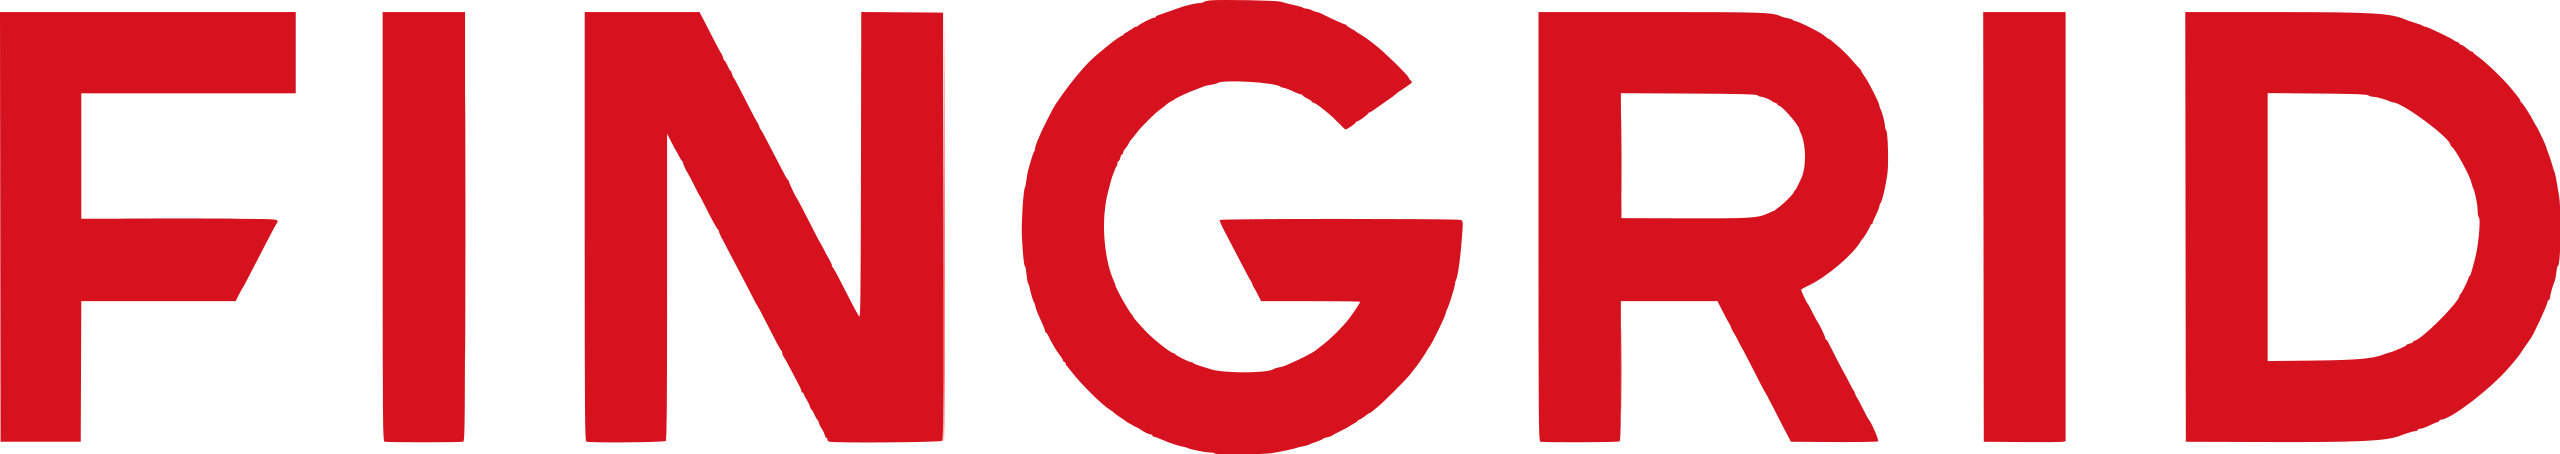 fingrid-logo